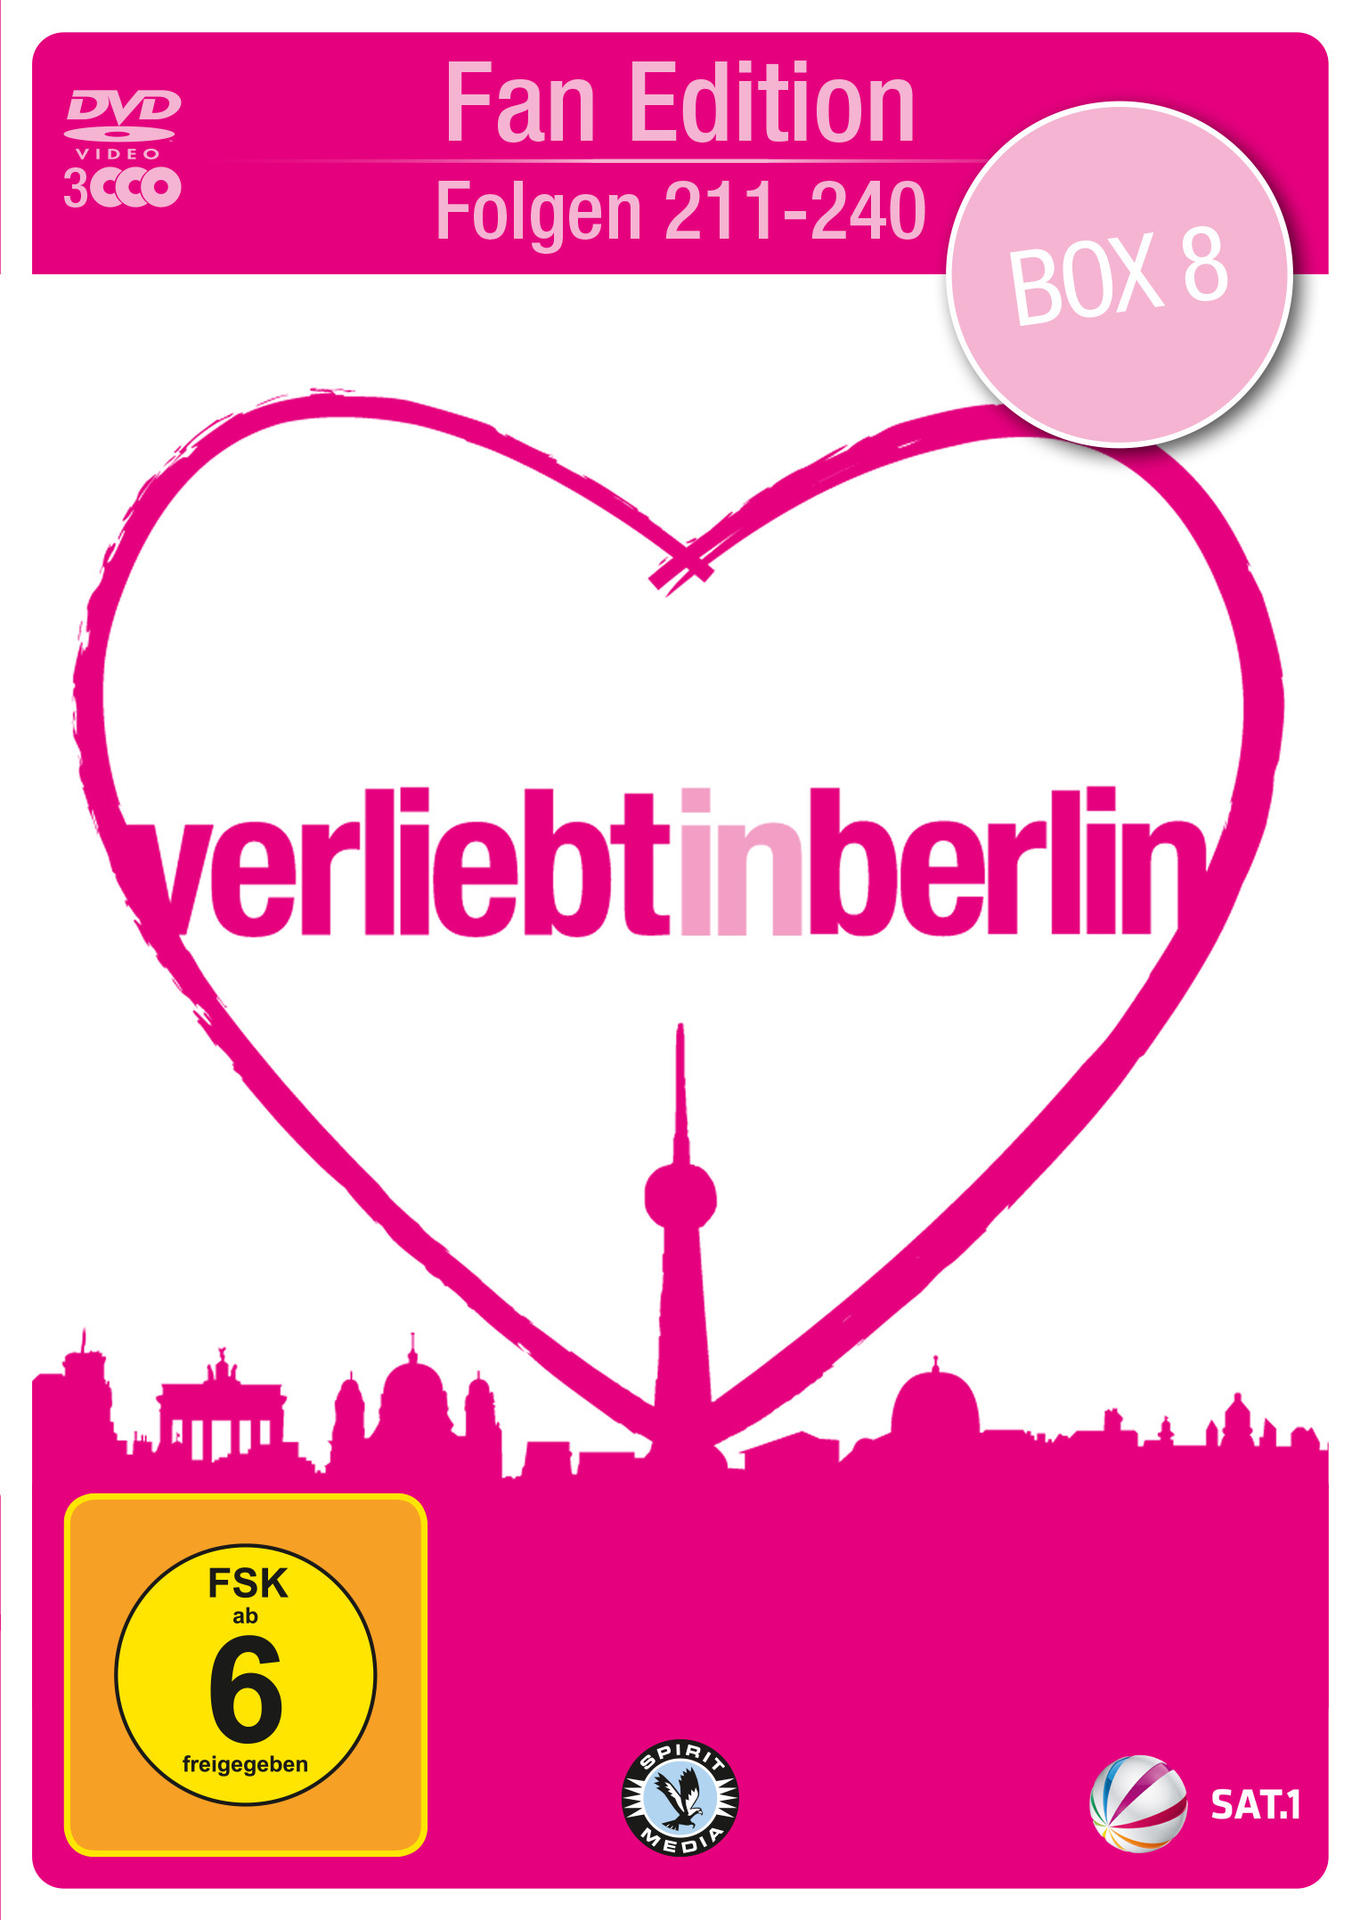 Box 8 - Folgen - Verliebt DVD 211-240 In Berlin